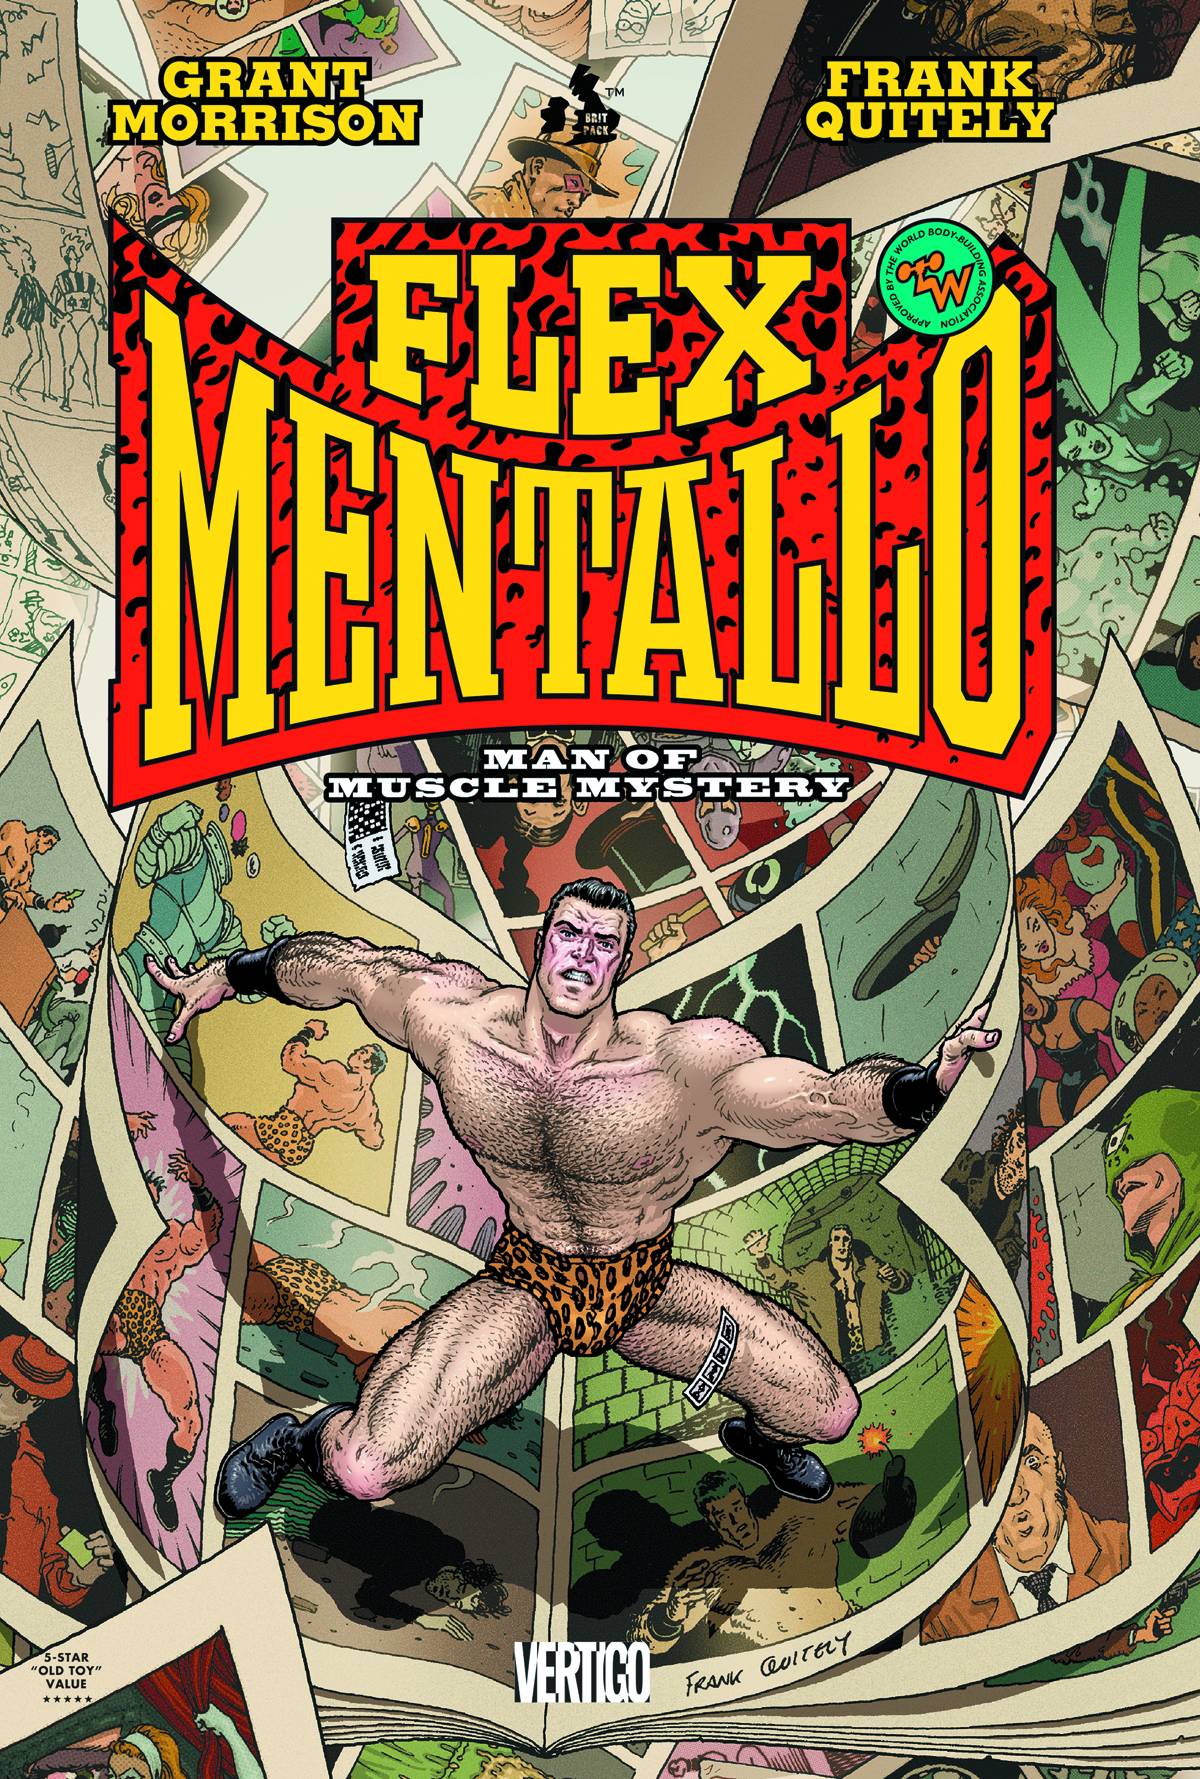 Flex Mentallo Man of Muscle Mystery Graphic Novel